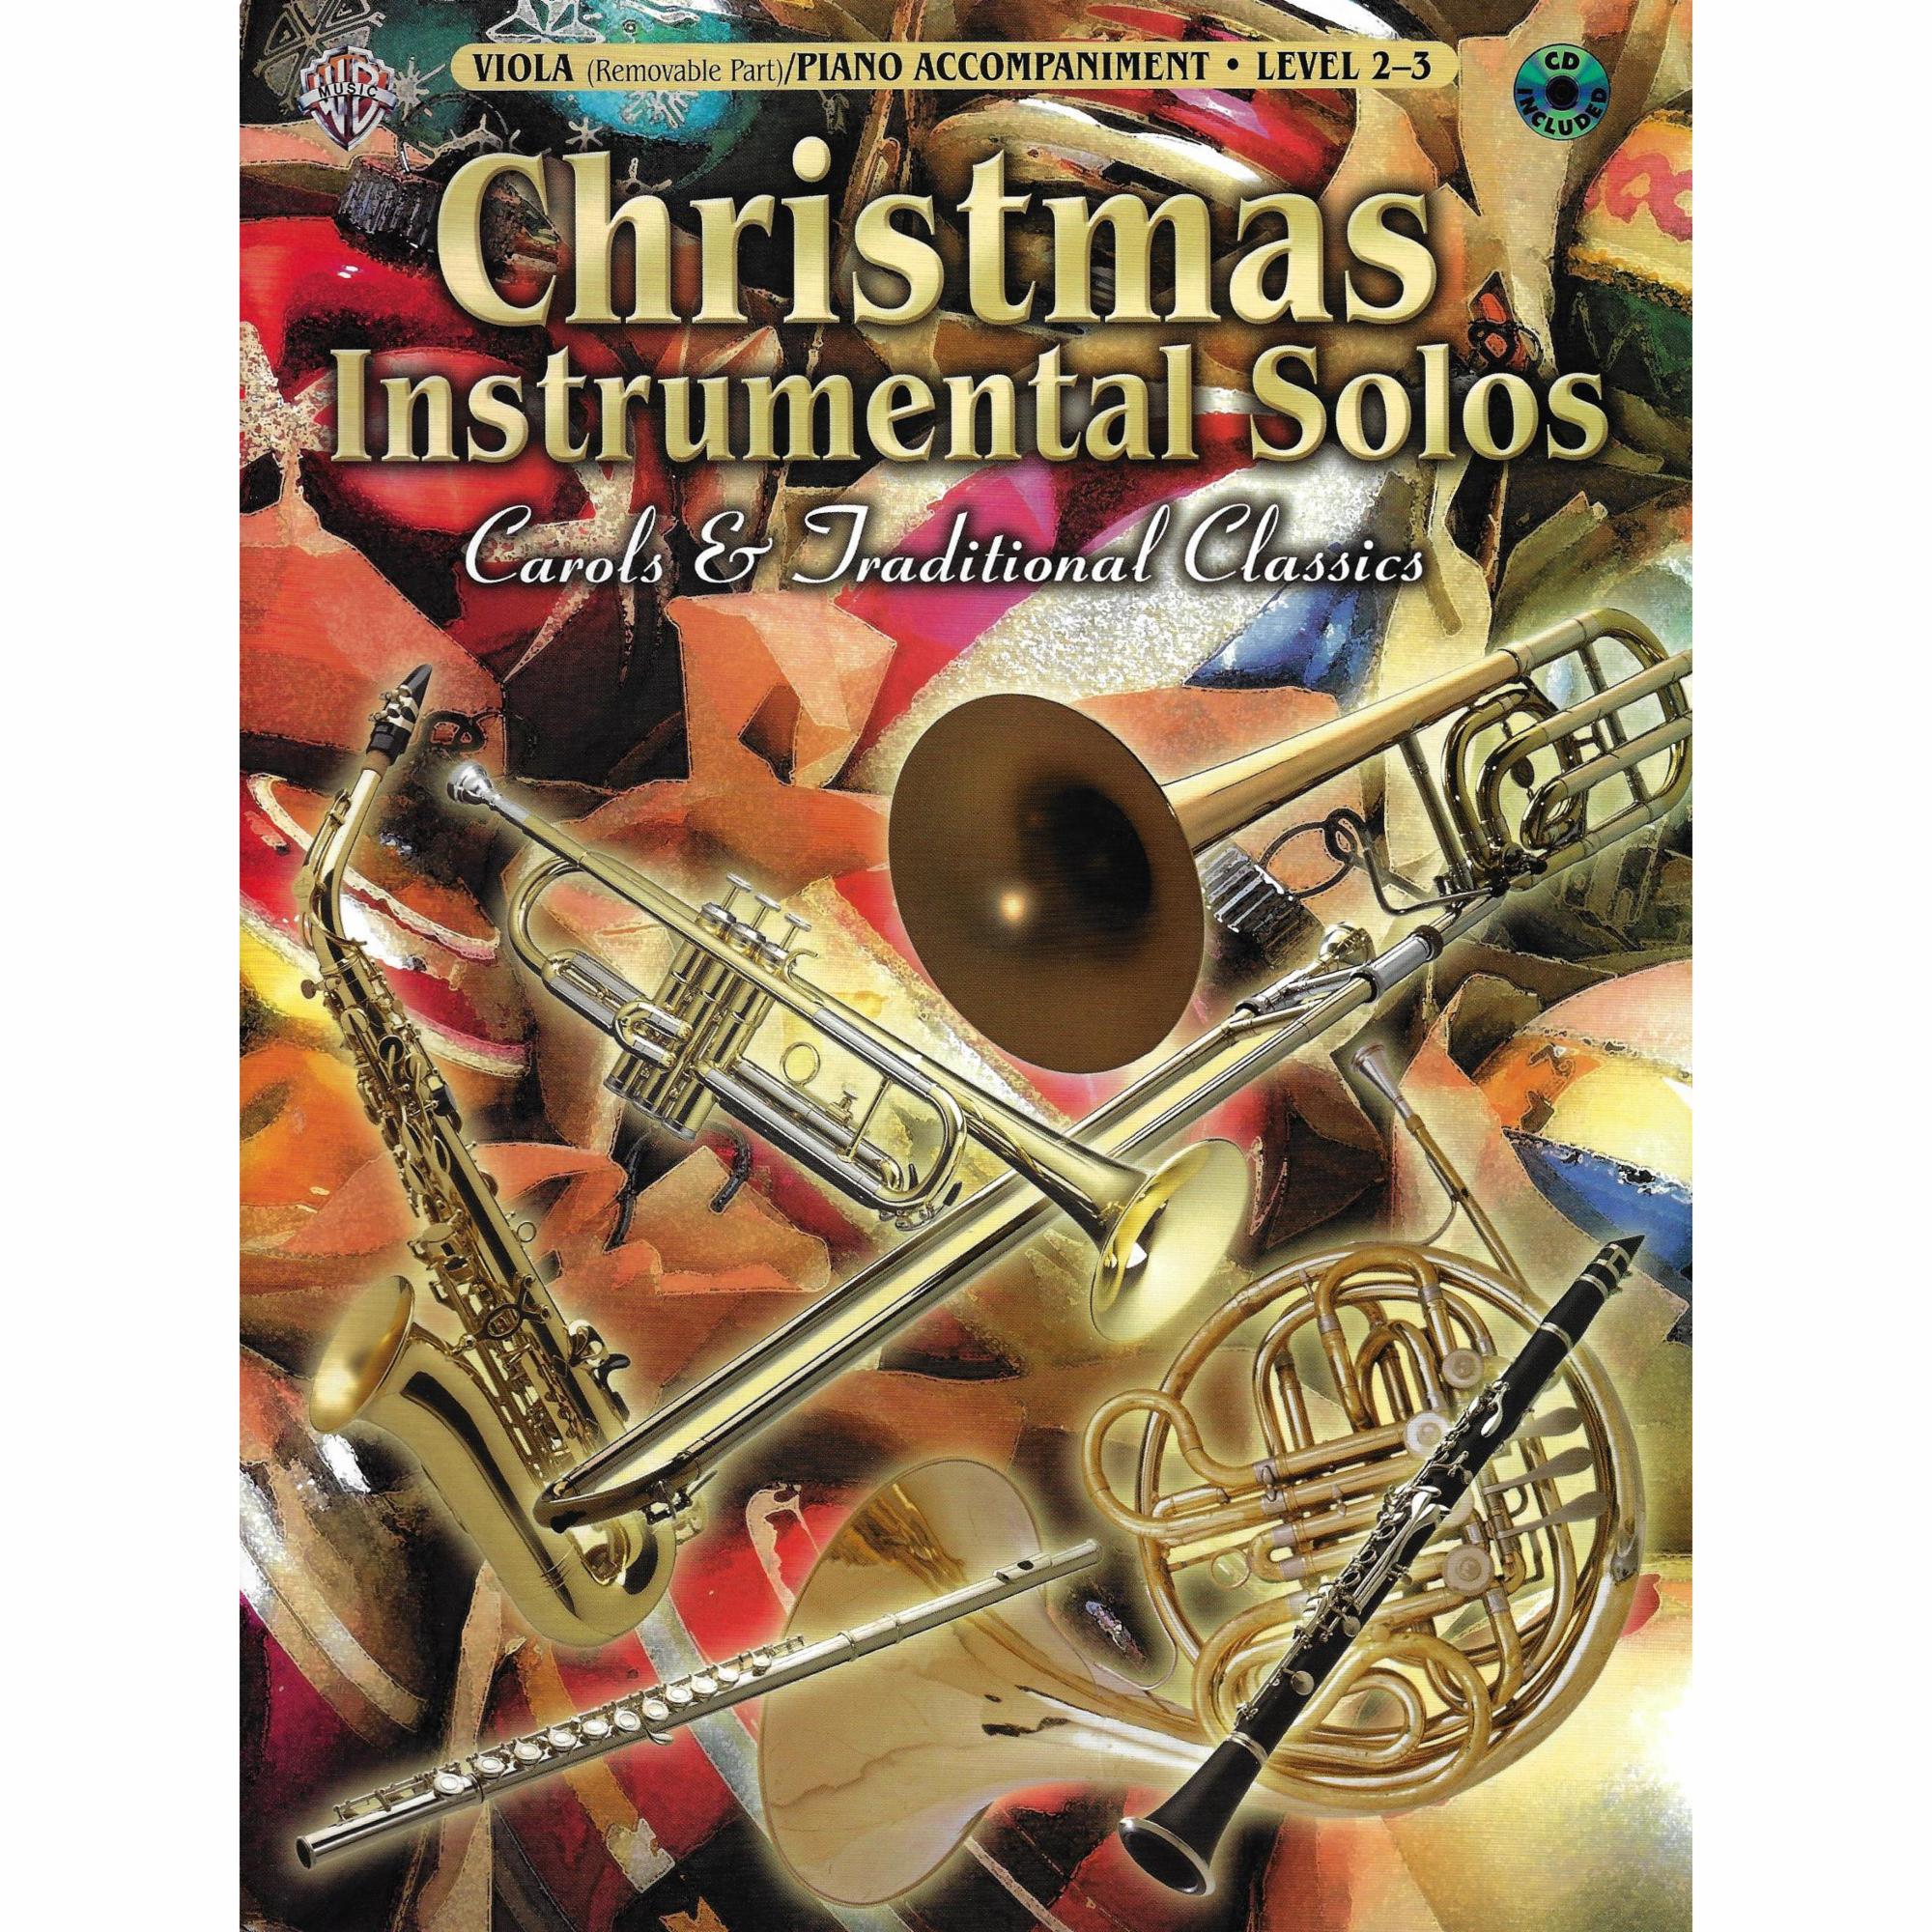 Christmas Carols and Traditional Classics for Viola and Piano